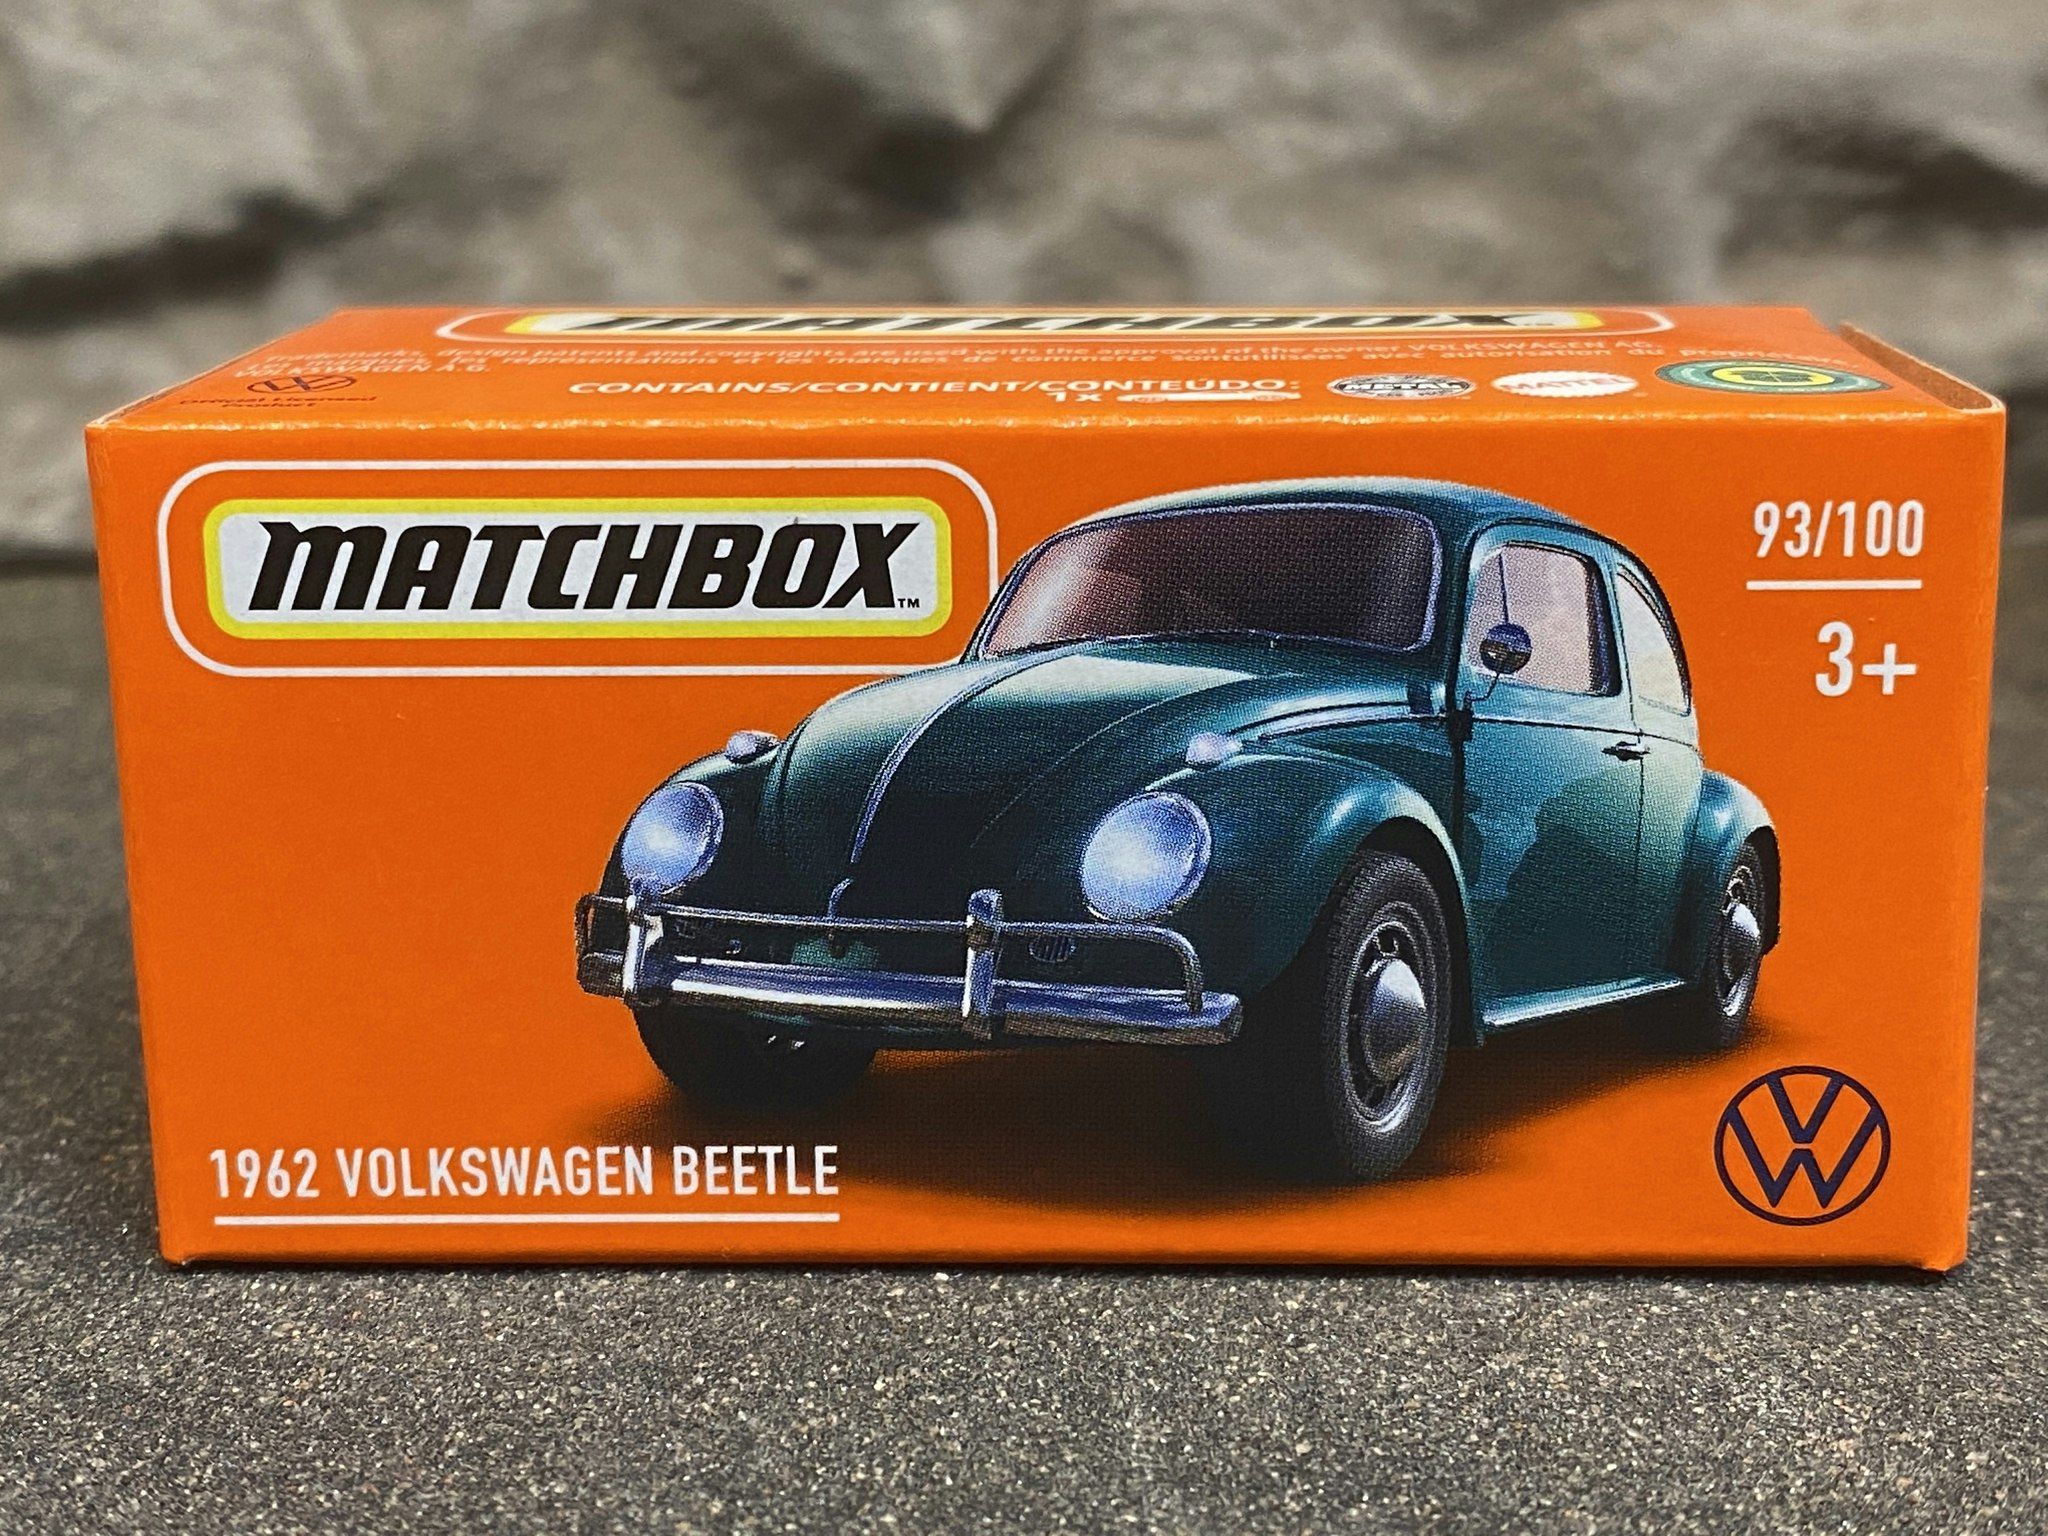 Skala 1/64 Matchbox - Volksvagen Beetle bubbla 1962', Grön m drag